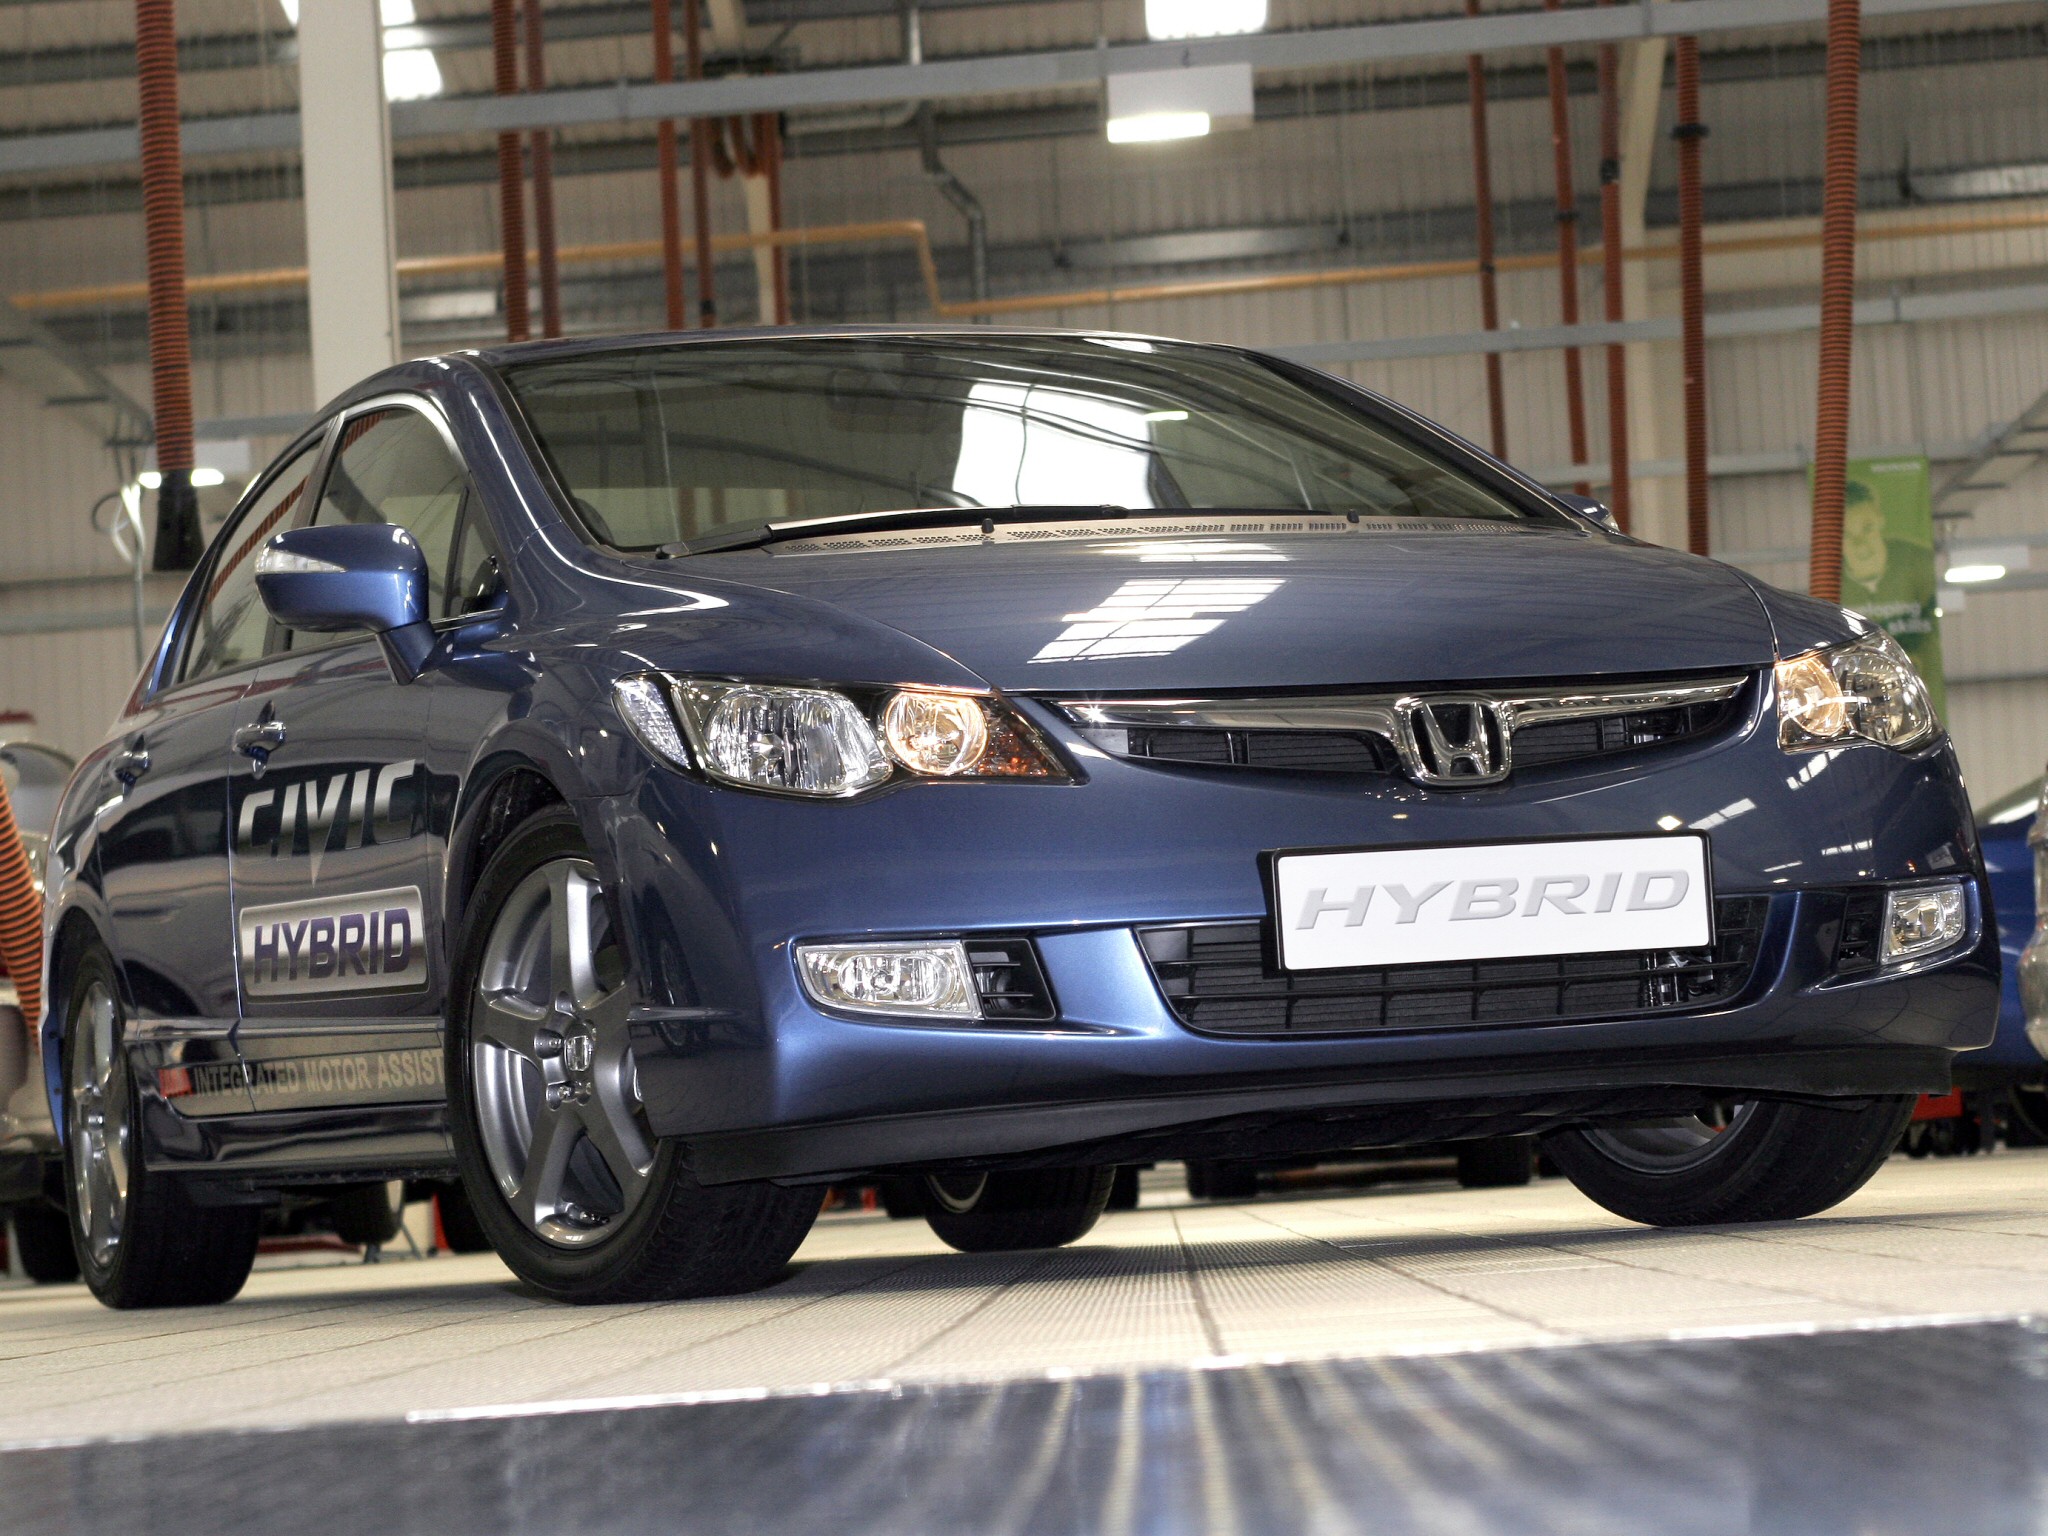 2012 Honda civic hybrid battery problems #6